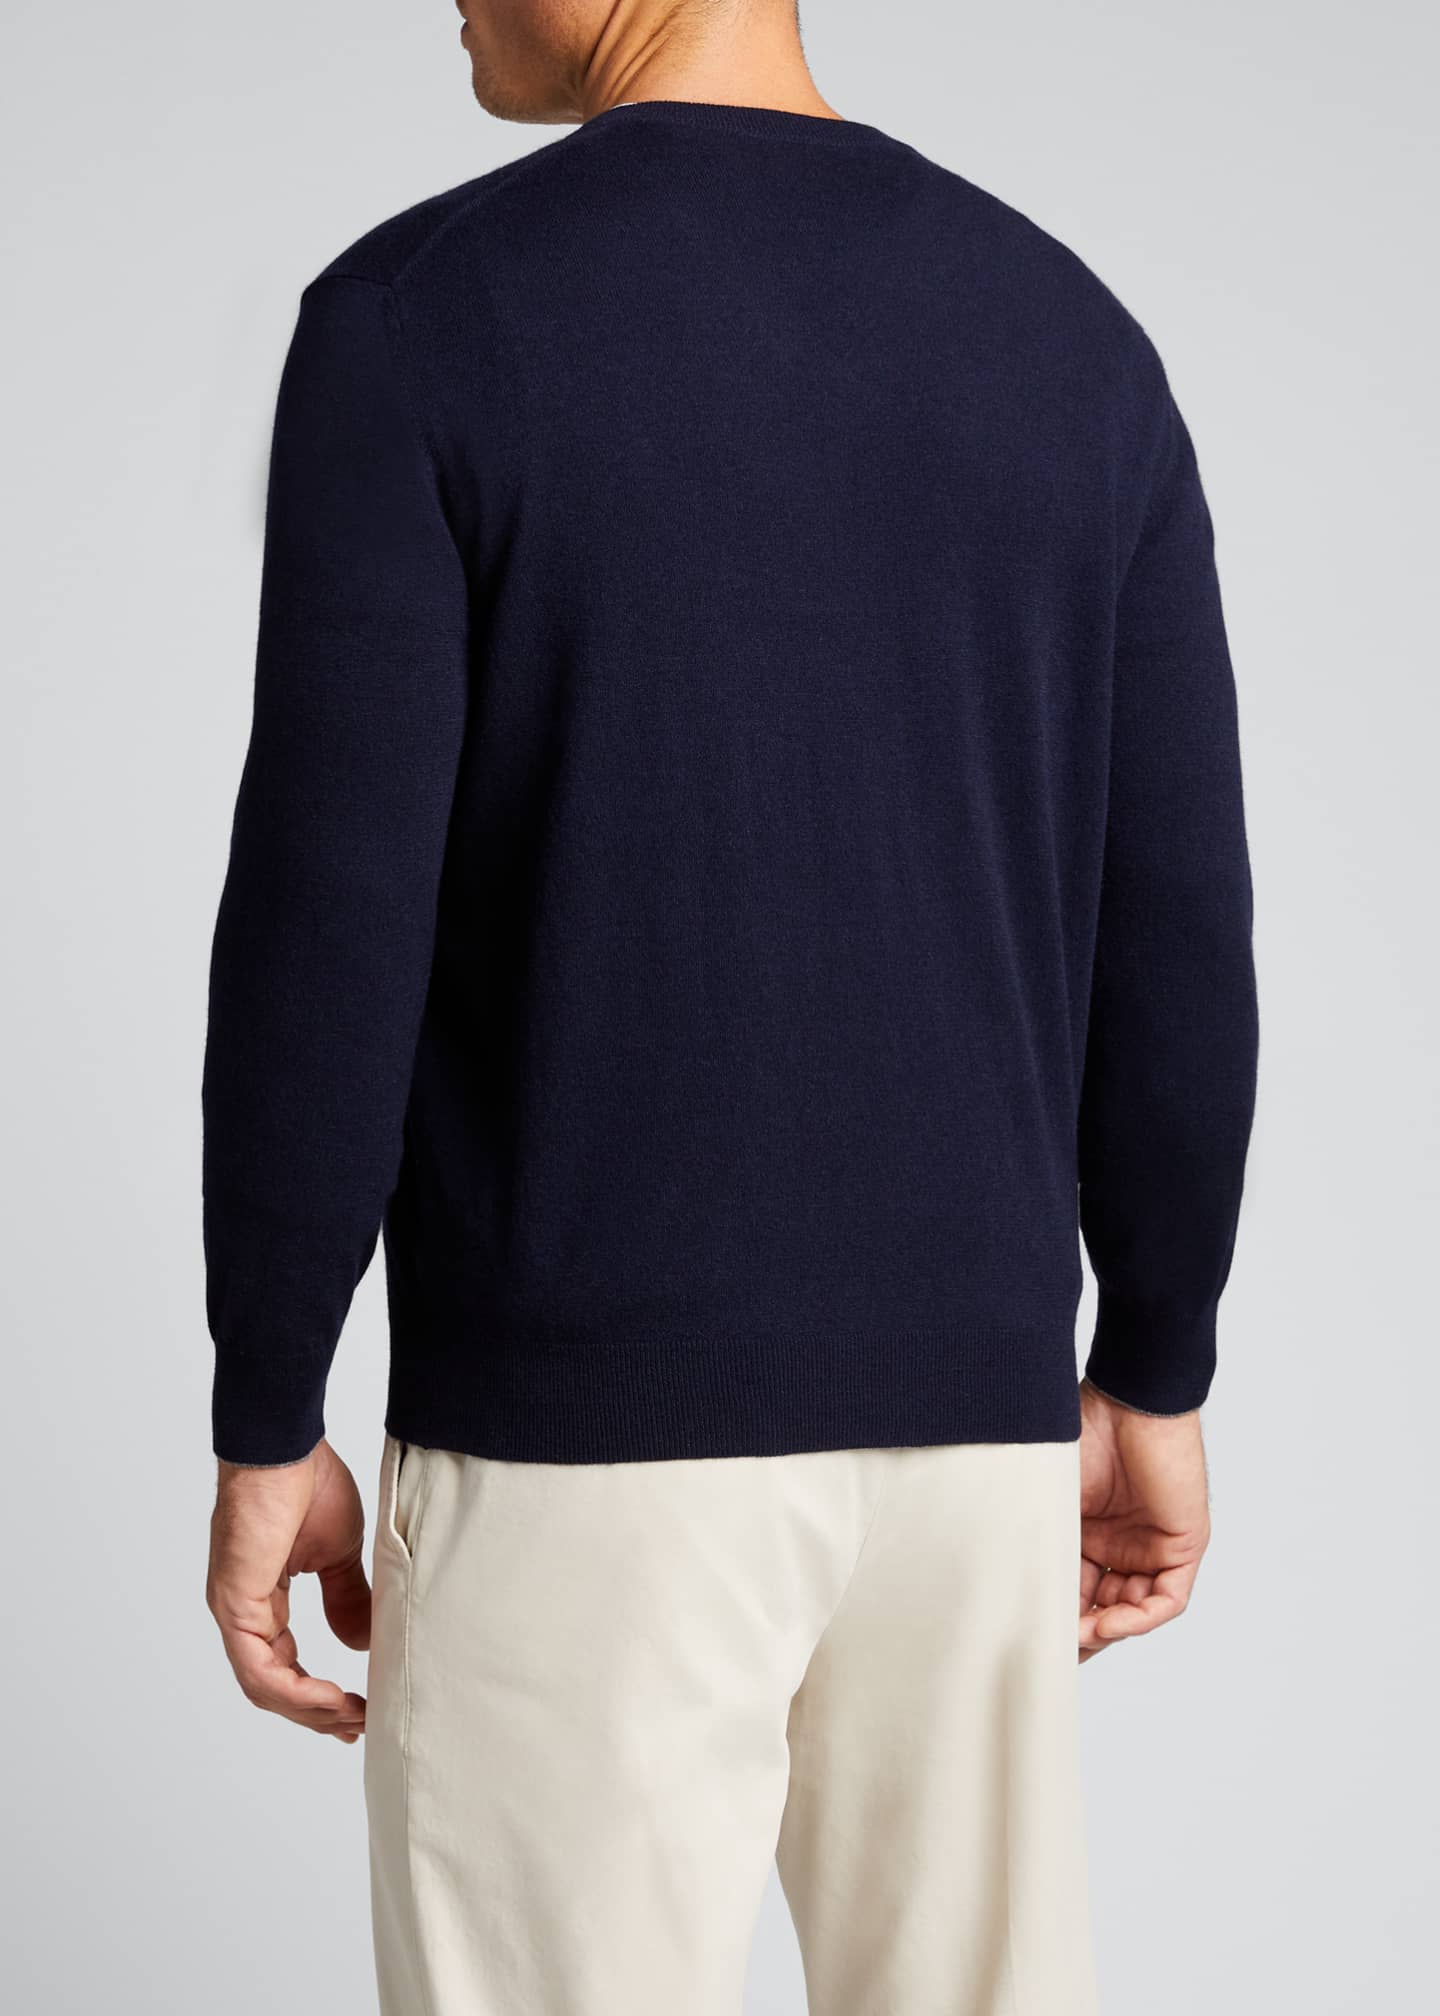 Brunello Cucinelli Men's 2-Ply Cashmere V-Neck Sweater - Bergdorf Goodman